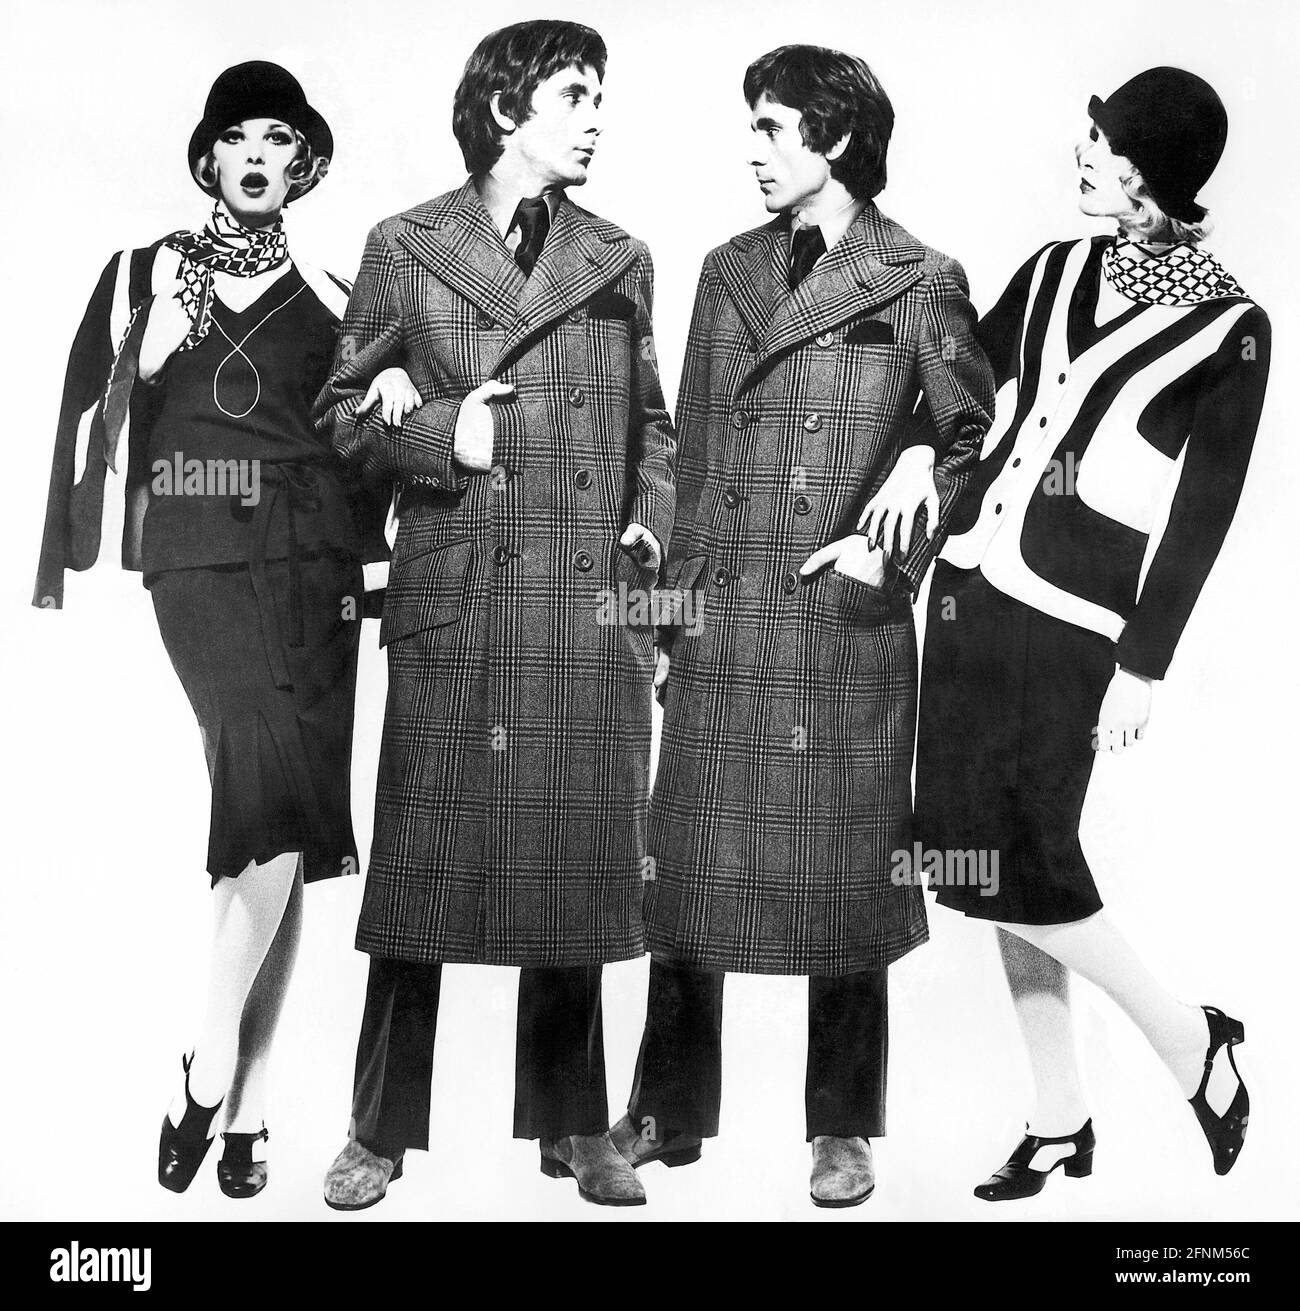 Mode, 60er Jahre, Herrenmode, Mantel im Prince of Wales Stil, 1967,  ZUSÄTZLICHE-RIGHTS-CLEARANCE-INFO-NOT-AVAILABLE Stockfotografie - Alamy